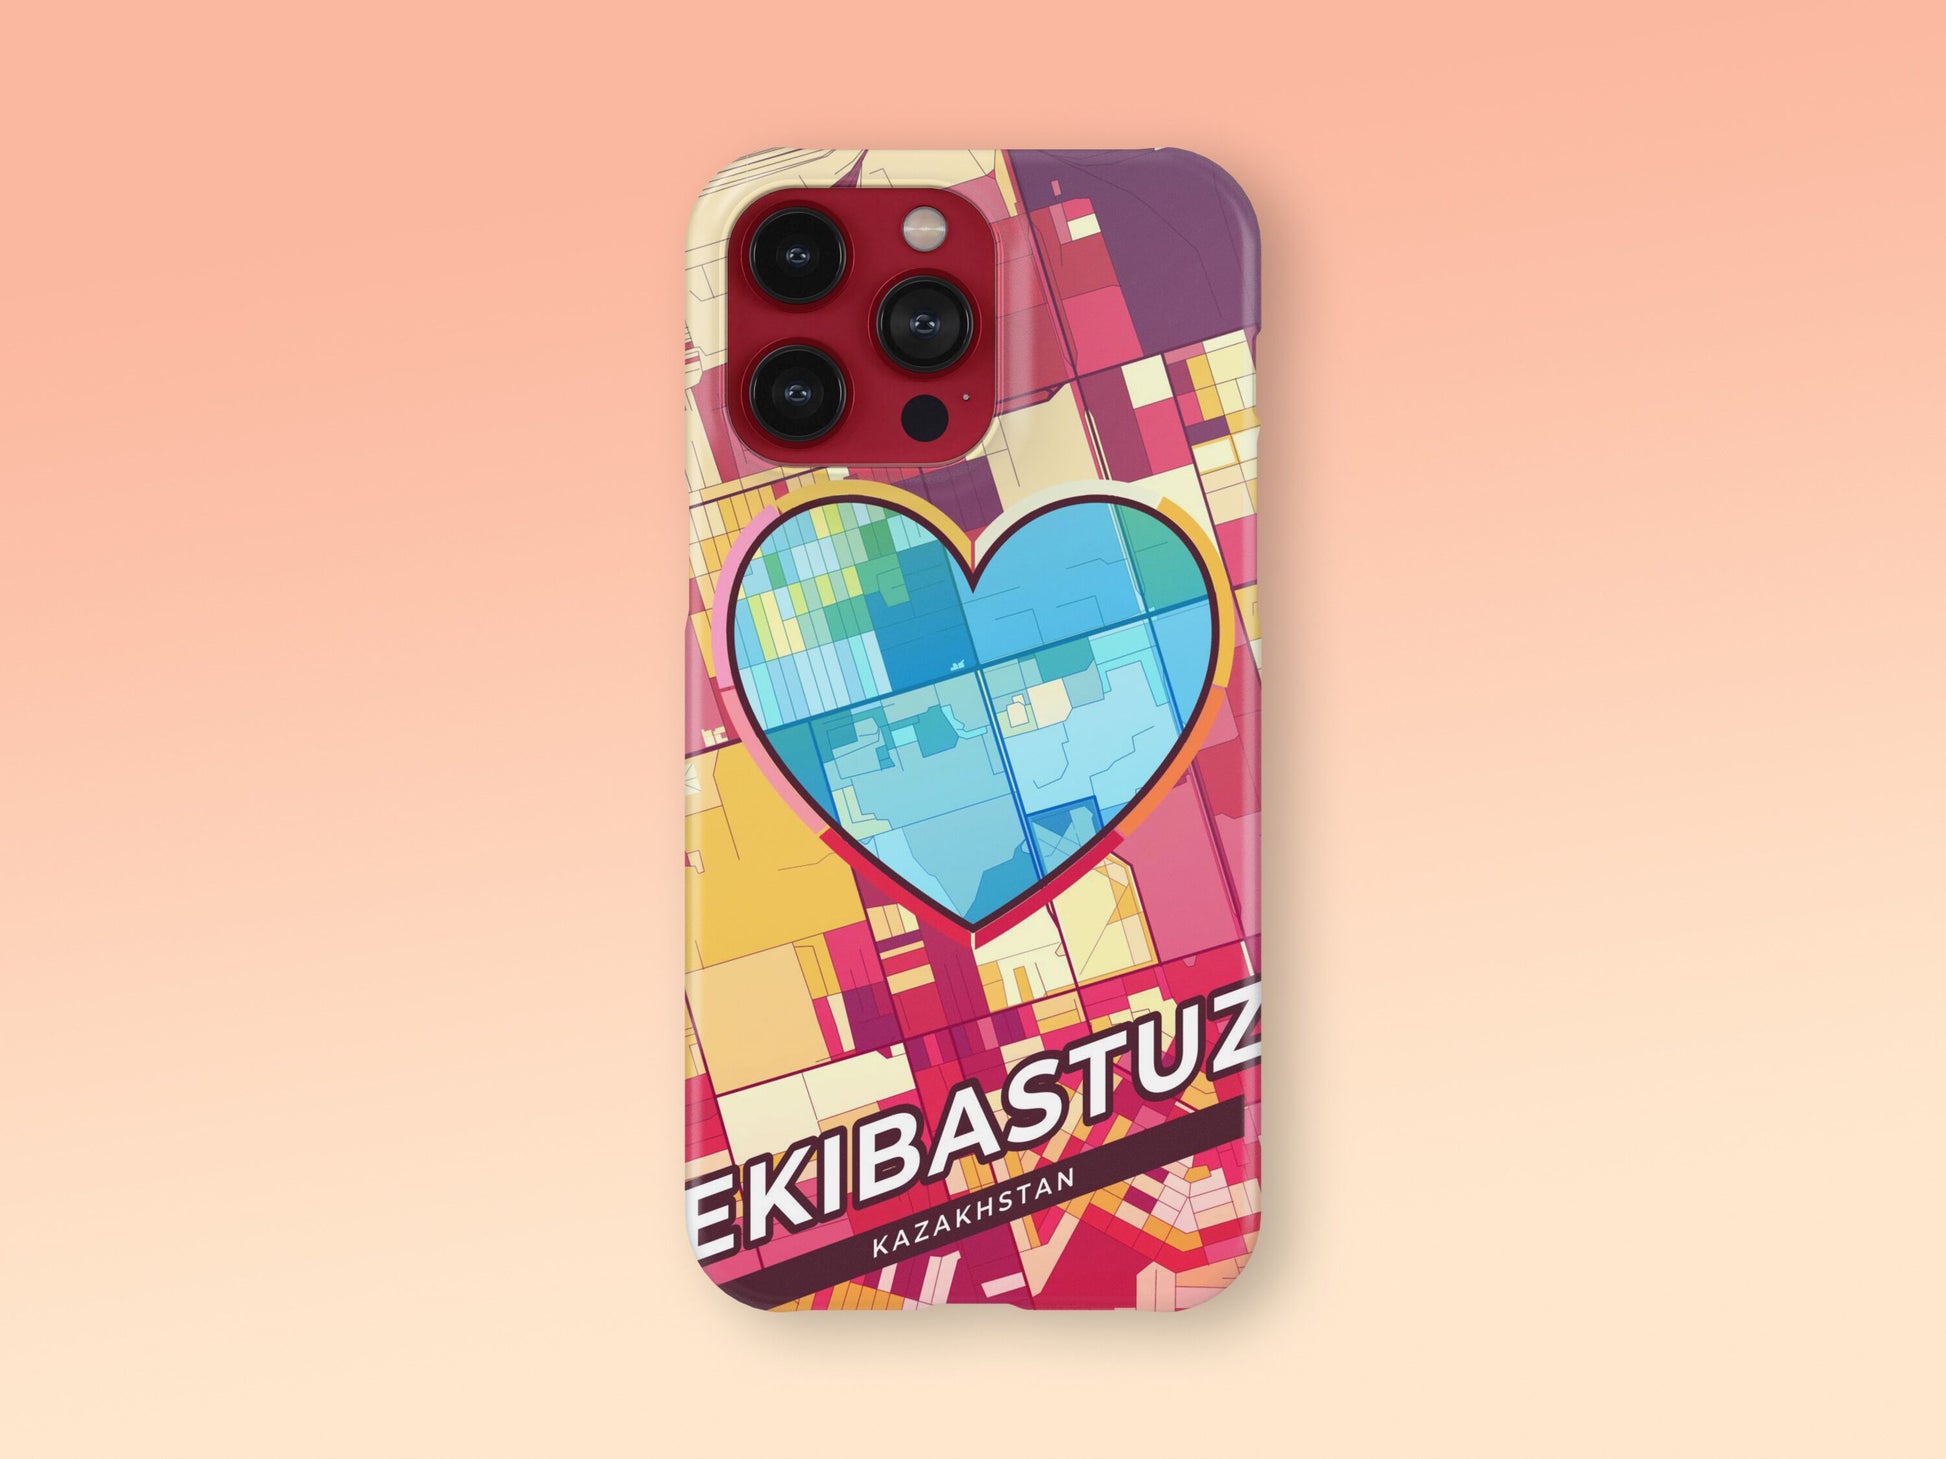 Ekibastuz Kazakhstan slim phone case with colorful icon. Birthday, wedding or housewarming gift. Couple match cases. 2